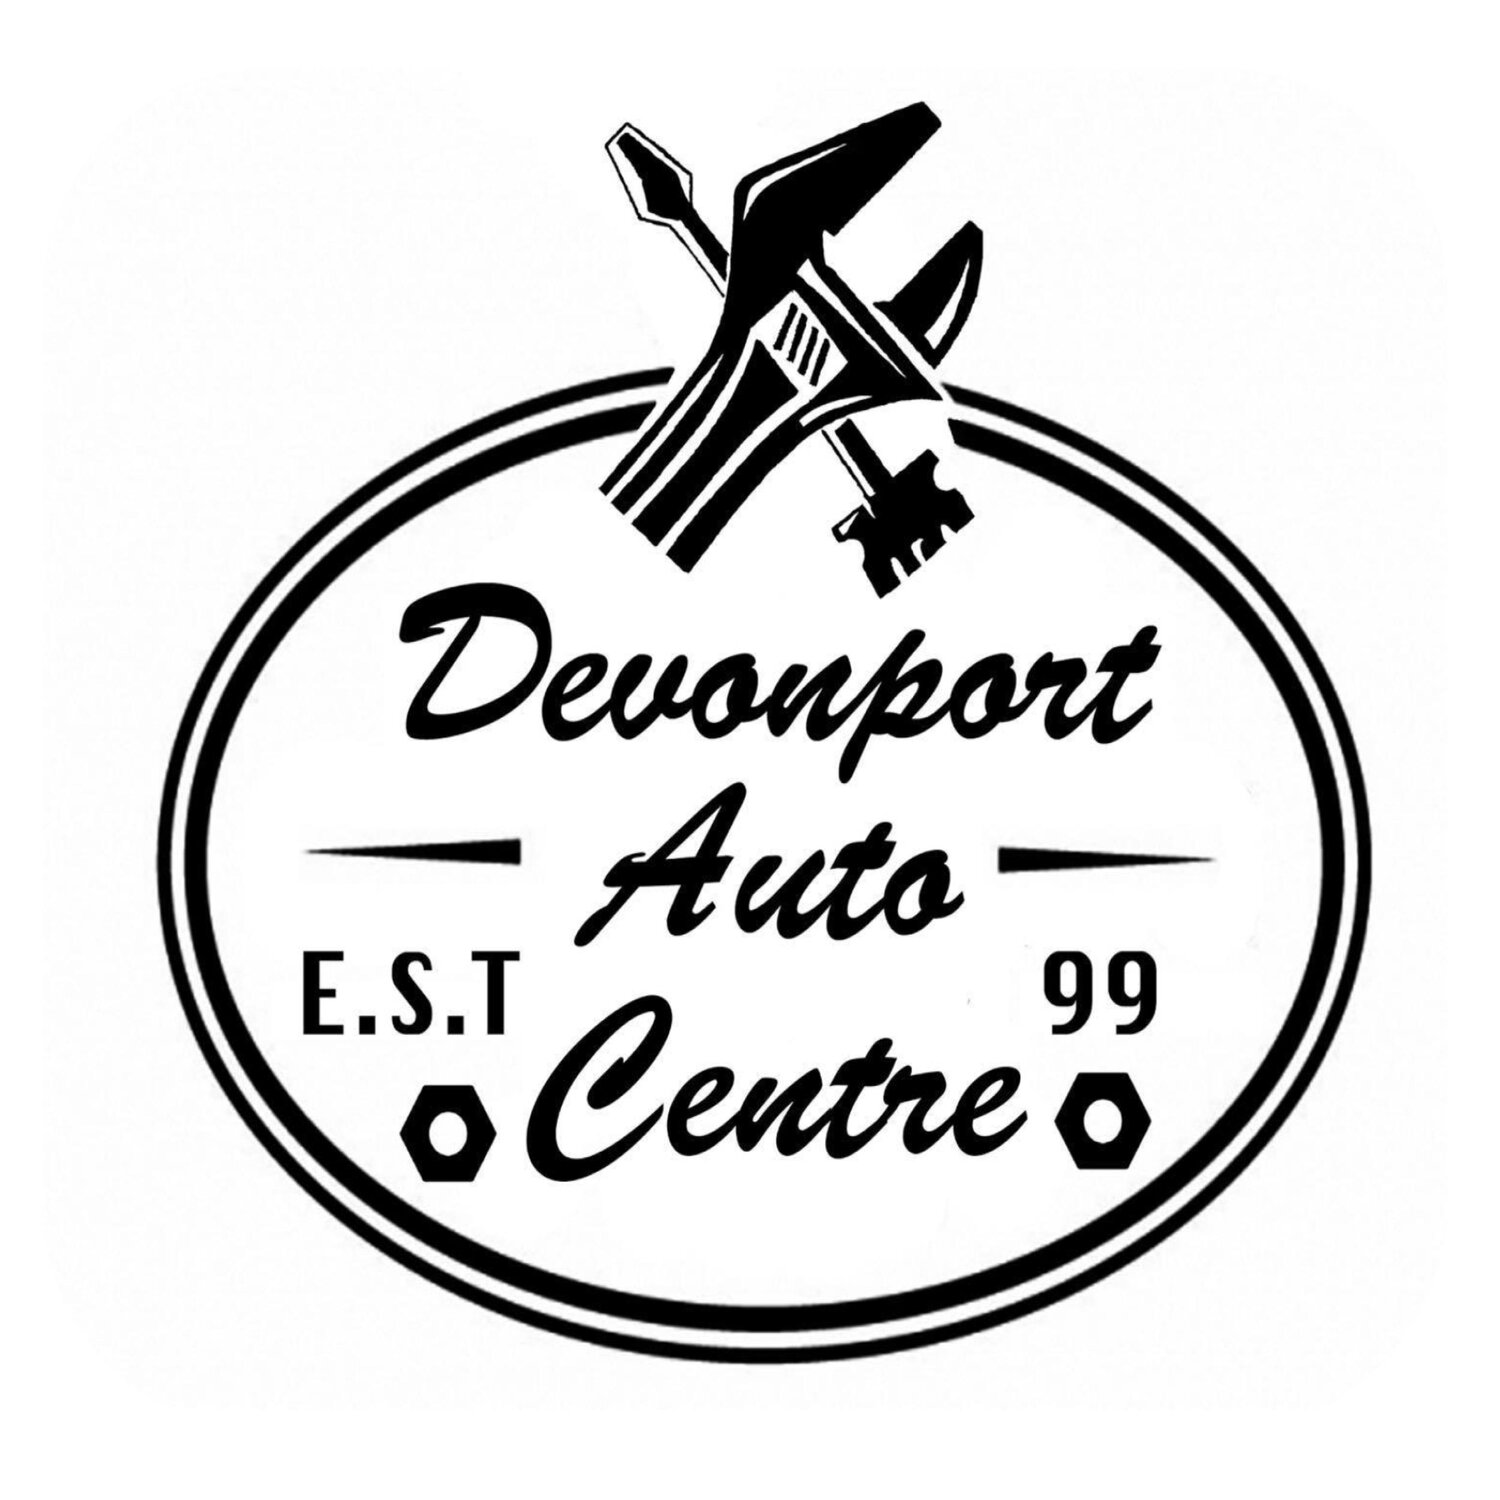 Devonport Auto Centre 